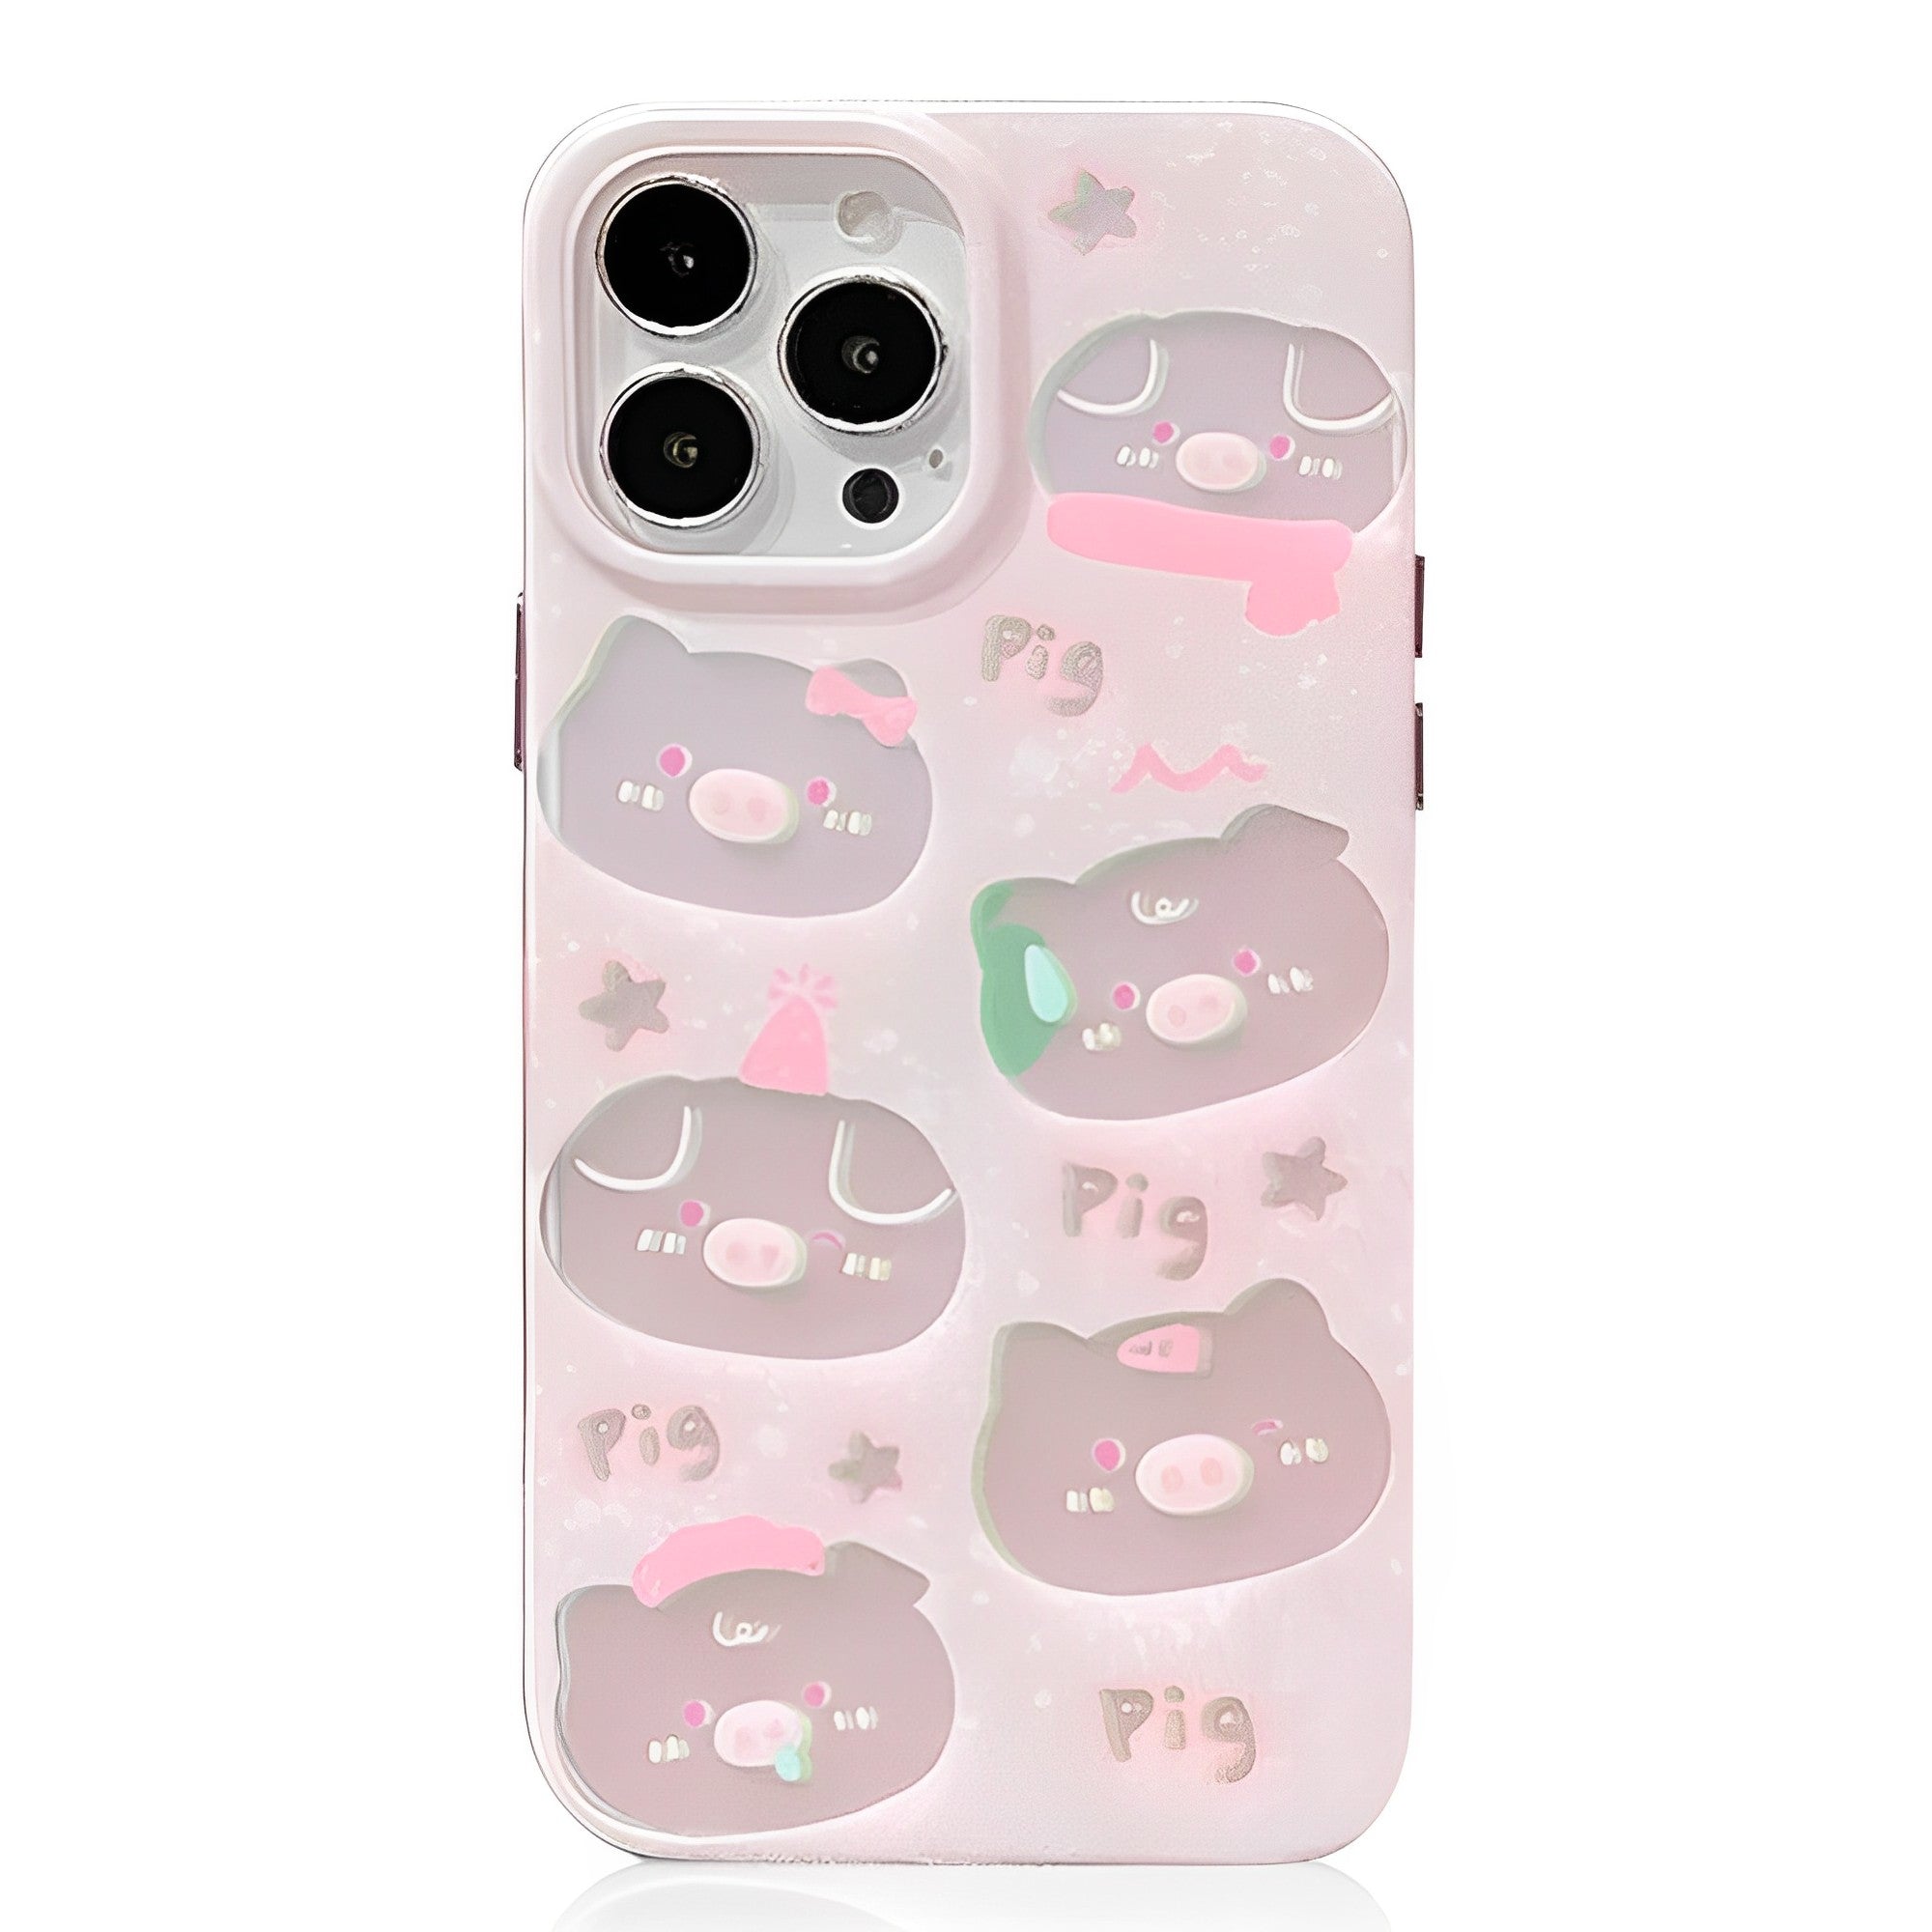 Cute Pig Laser iphone Case